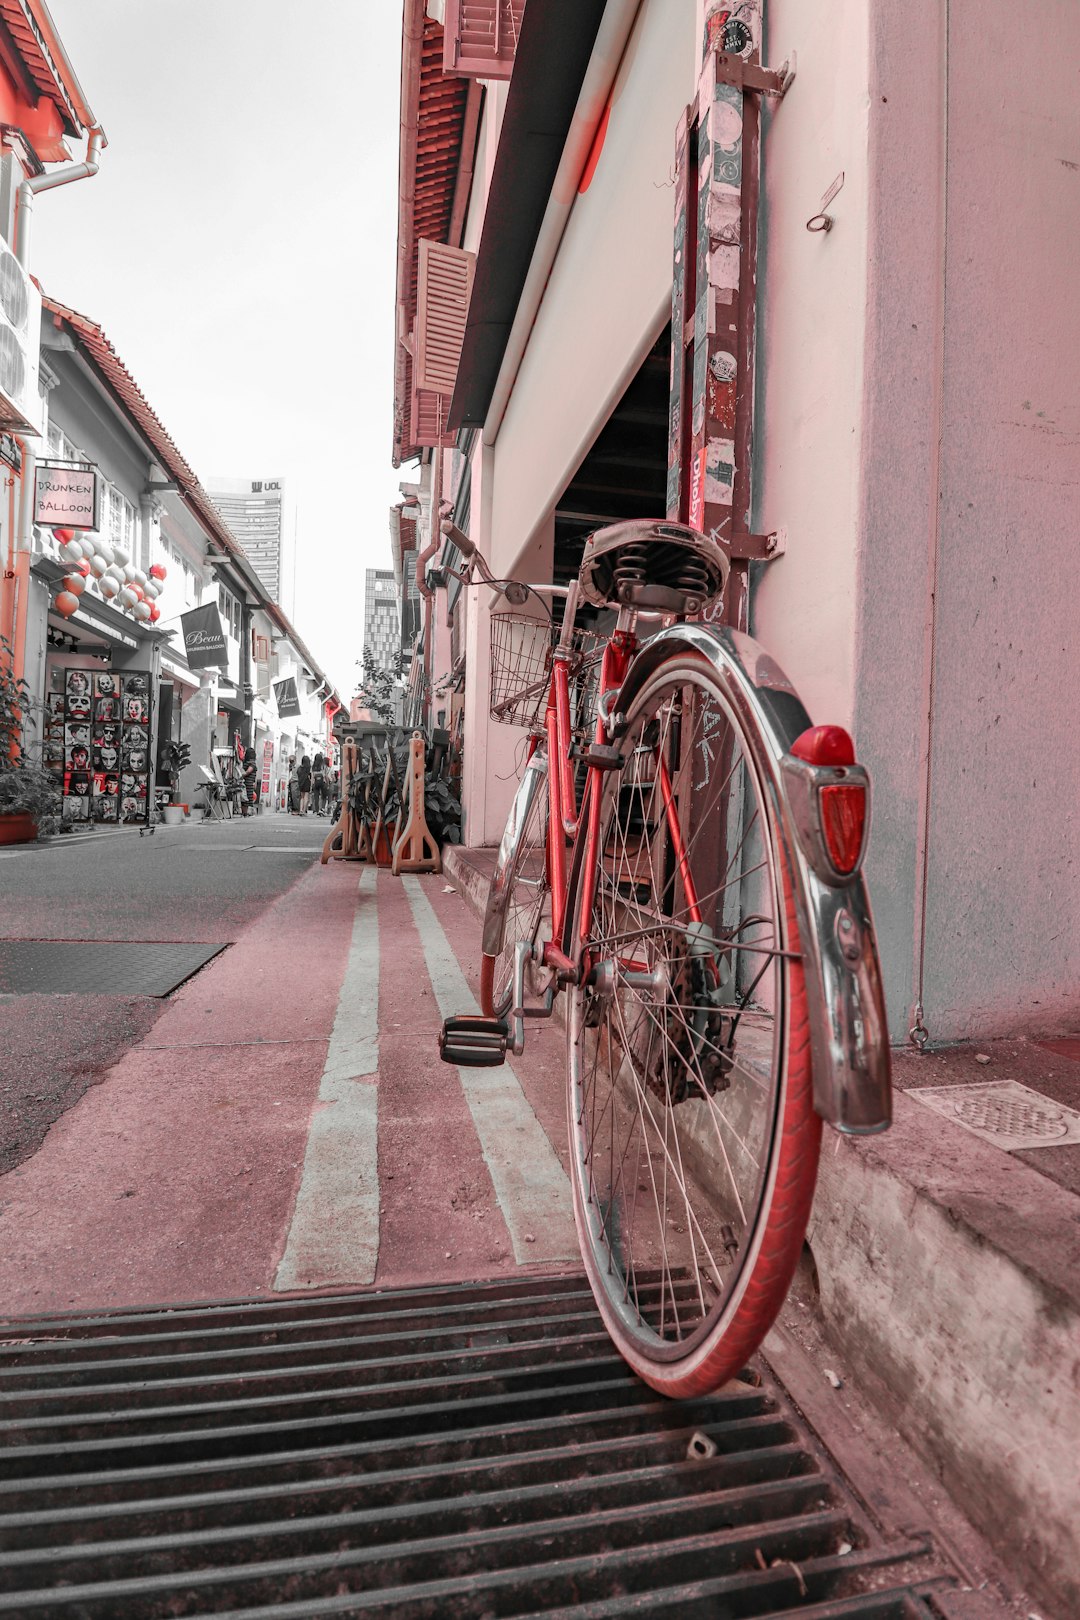 red city bike parked on sidewalk during daytime